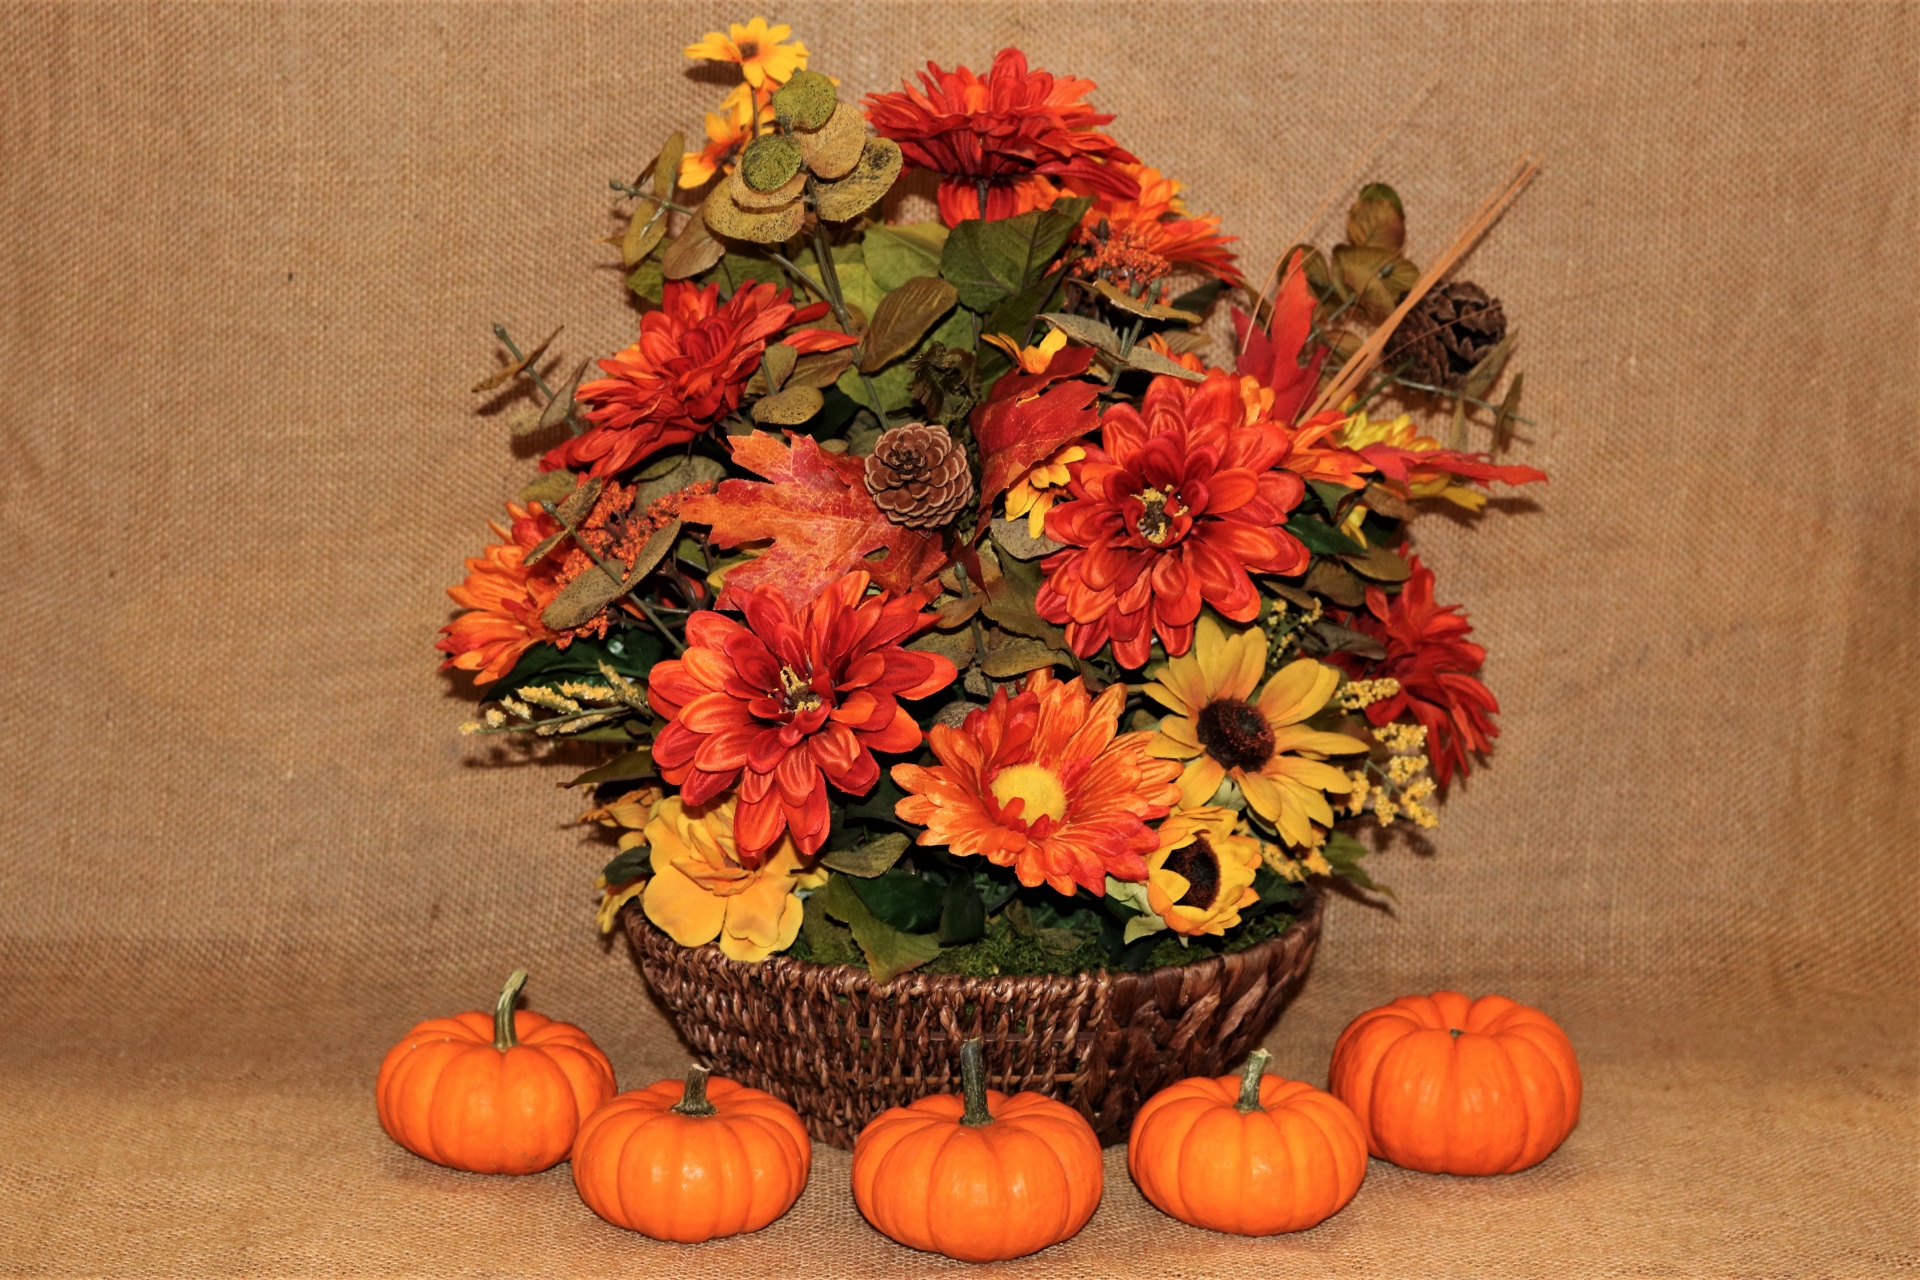 Pumpkins And Flowers On Burlap 2